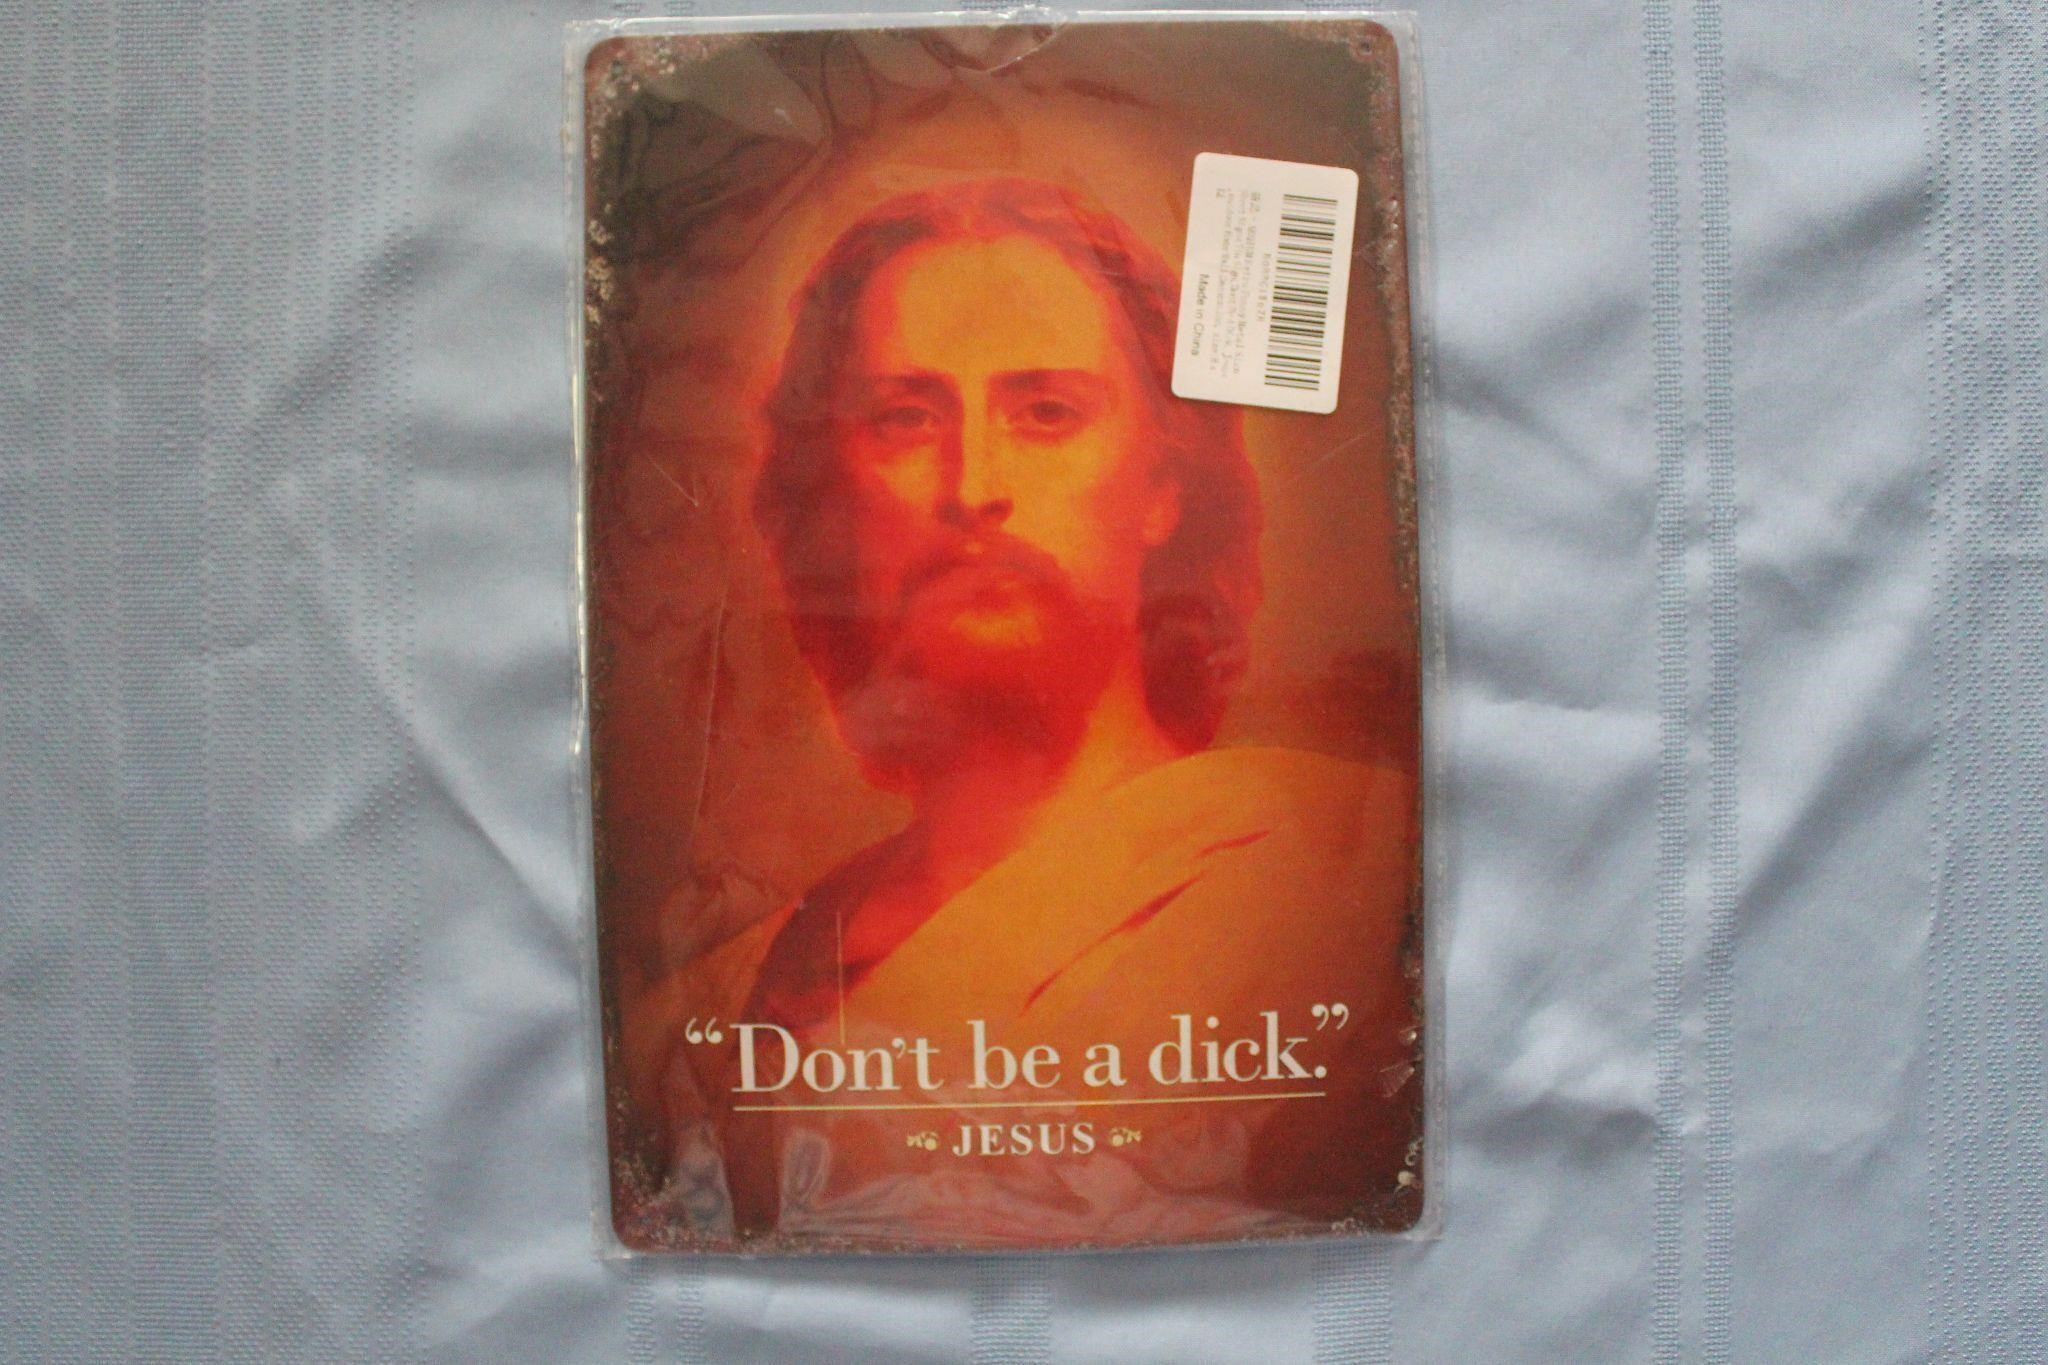 Retro Tin Sign "Don't be a dick"